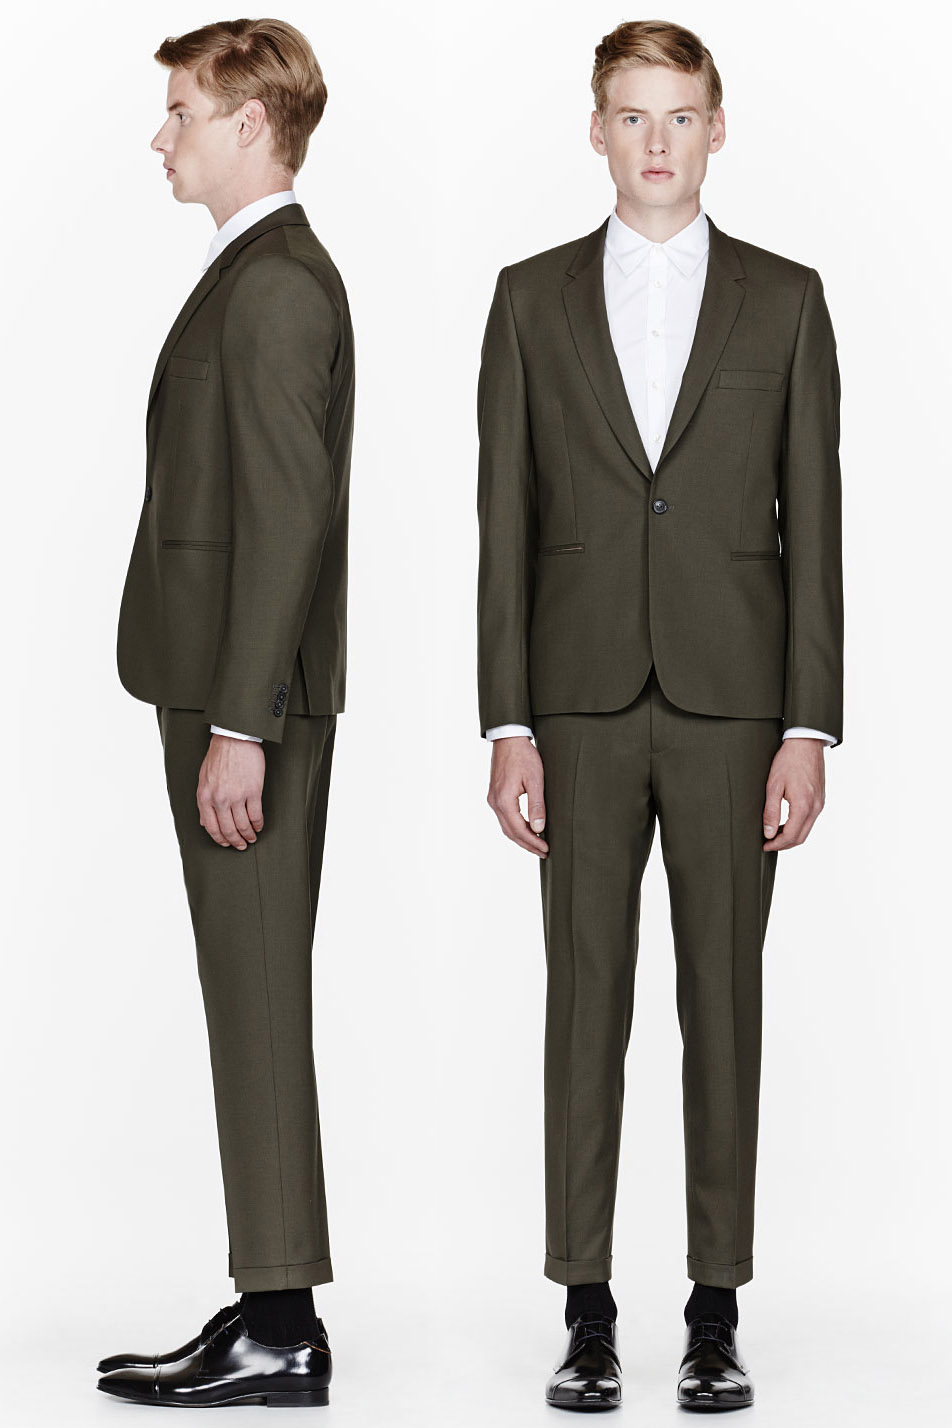 Slim Fit Olive Green Suit | SOLETOPIA